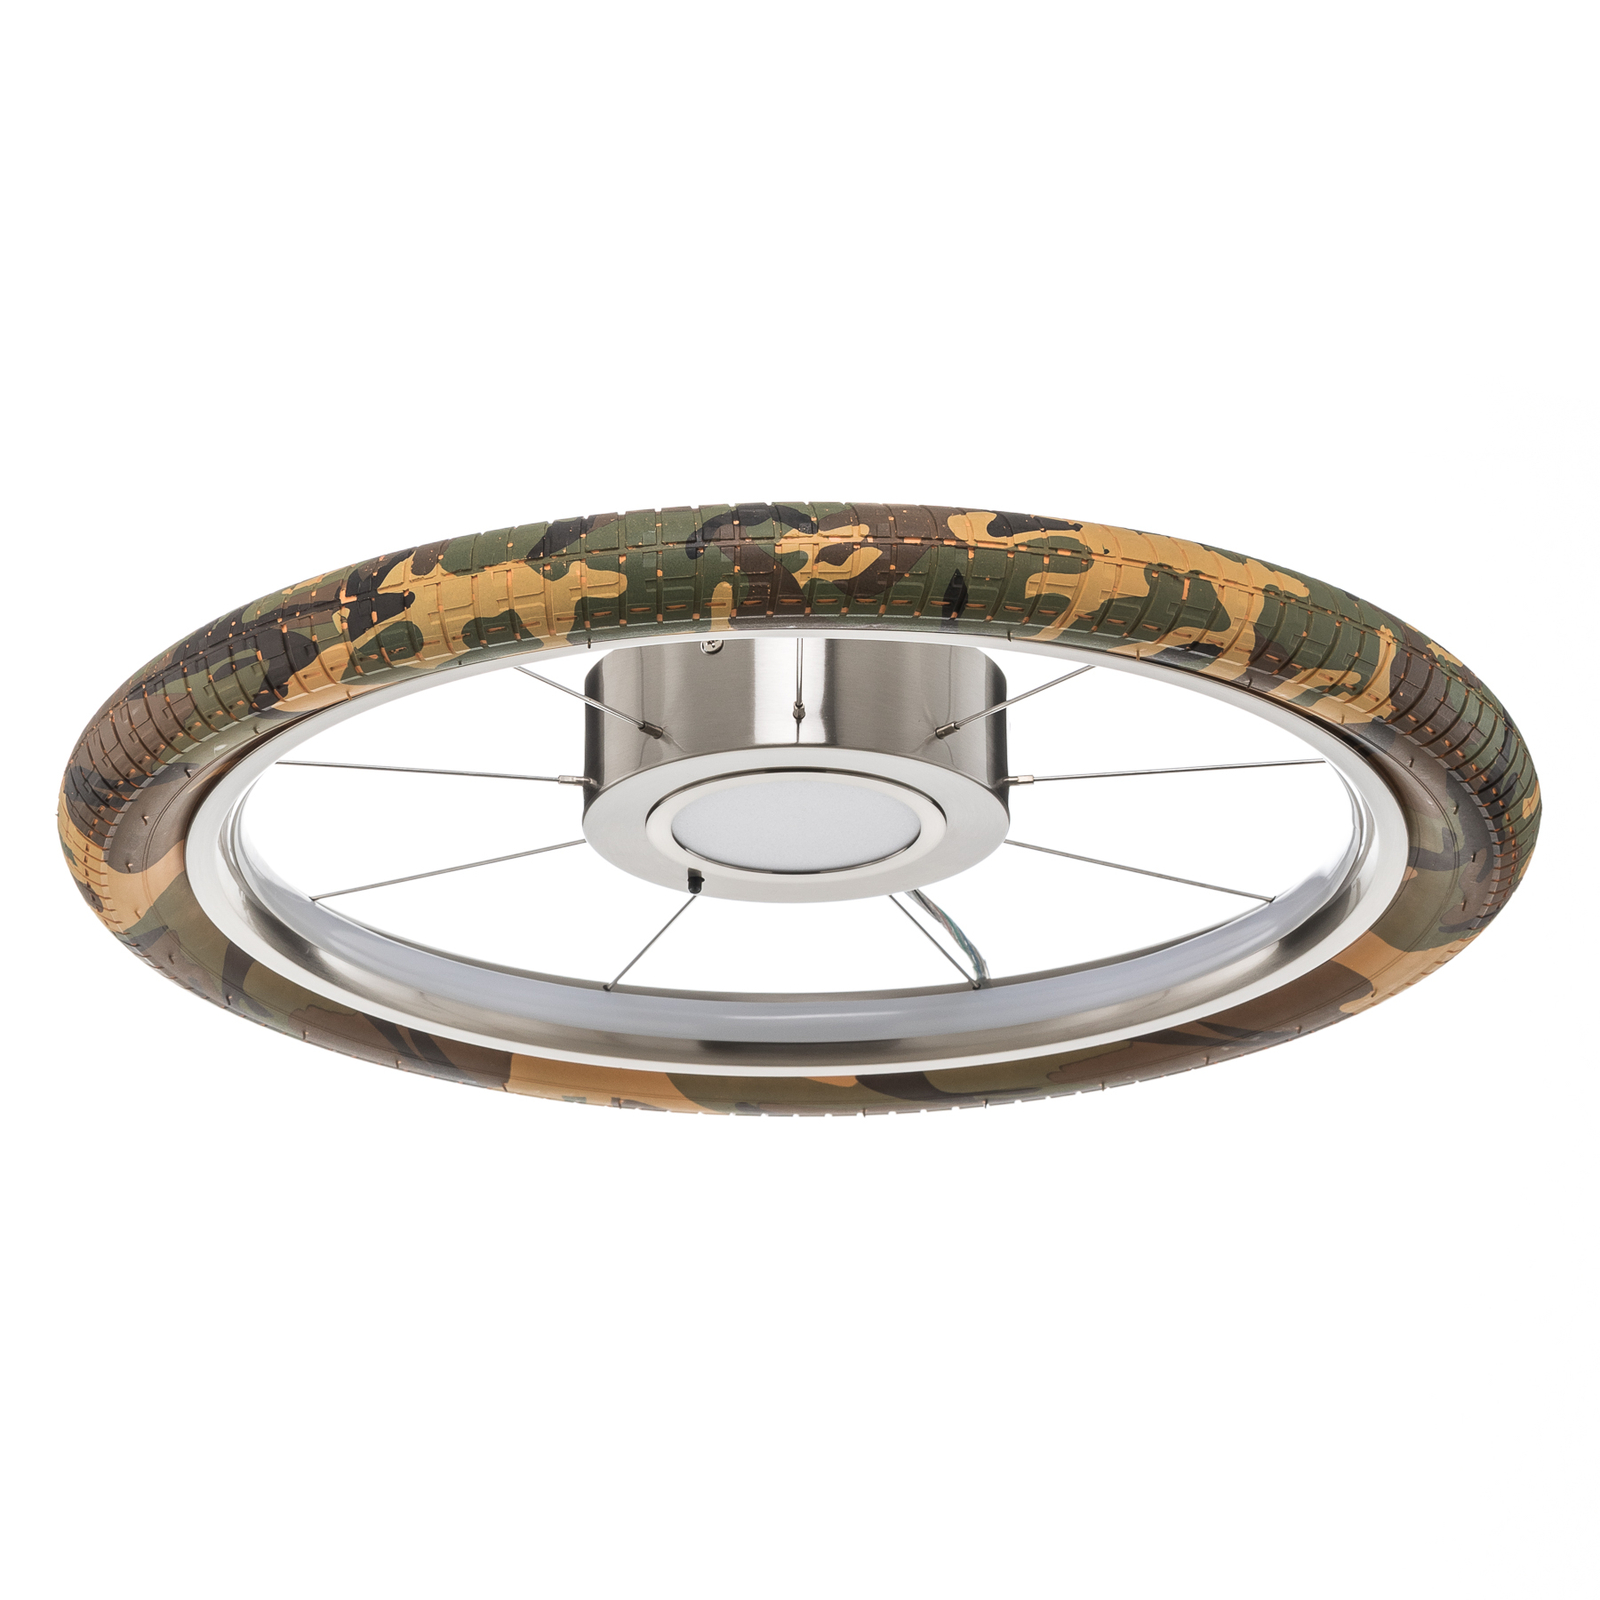 Wheel LED ceiling light, RGB, camouflage